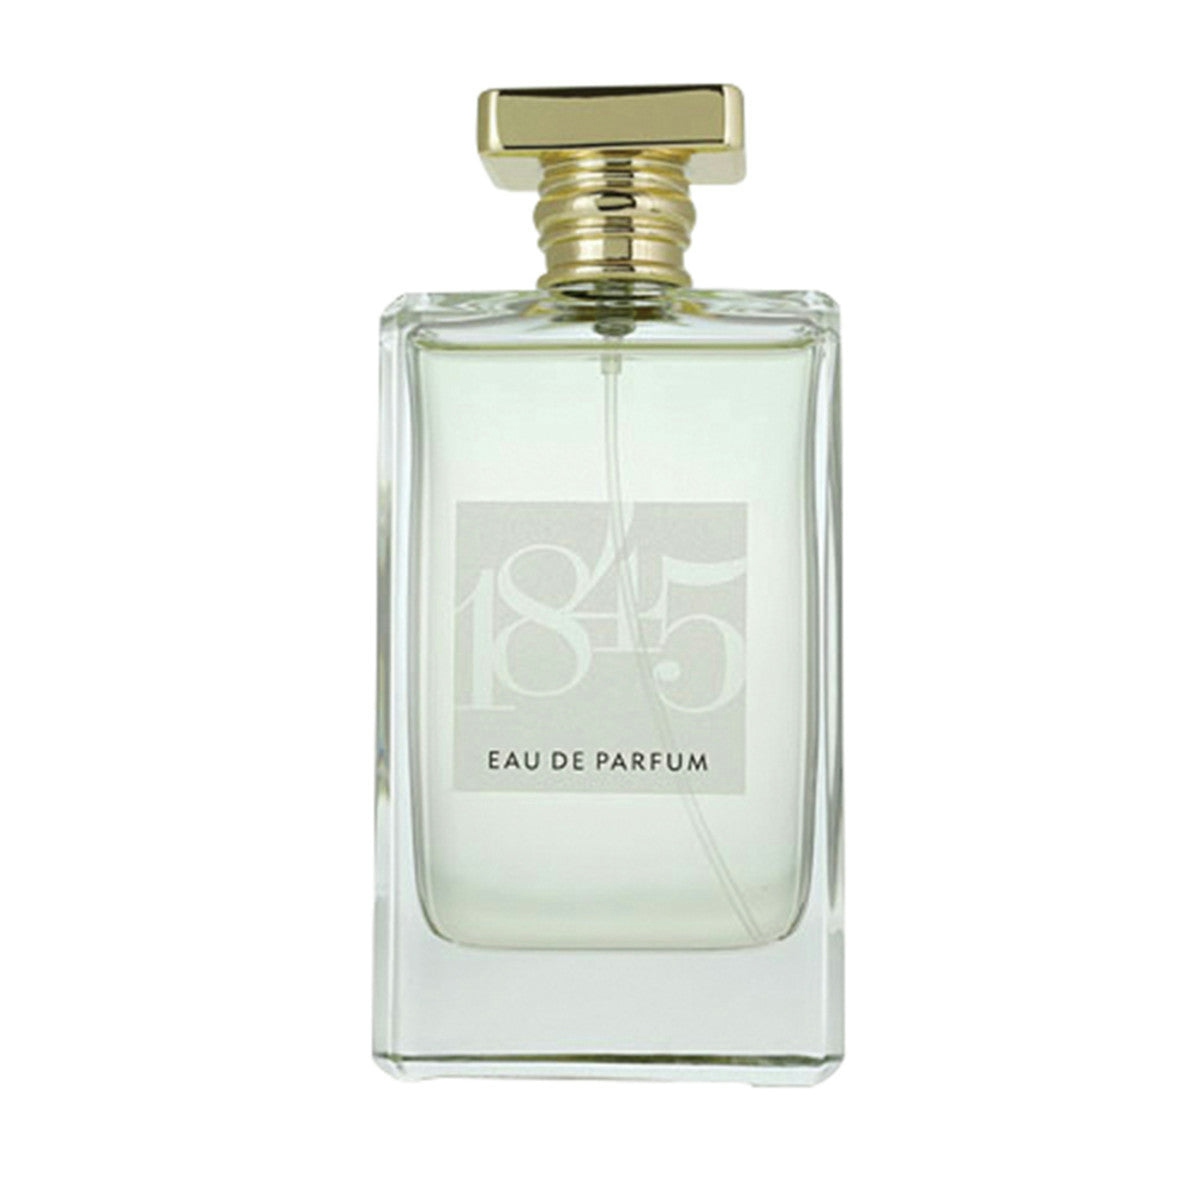 image of Pure Australian Sandalwood 1845 Eau De Parfum (For Women) 100ml on white background